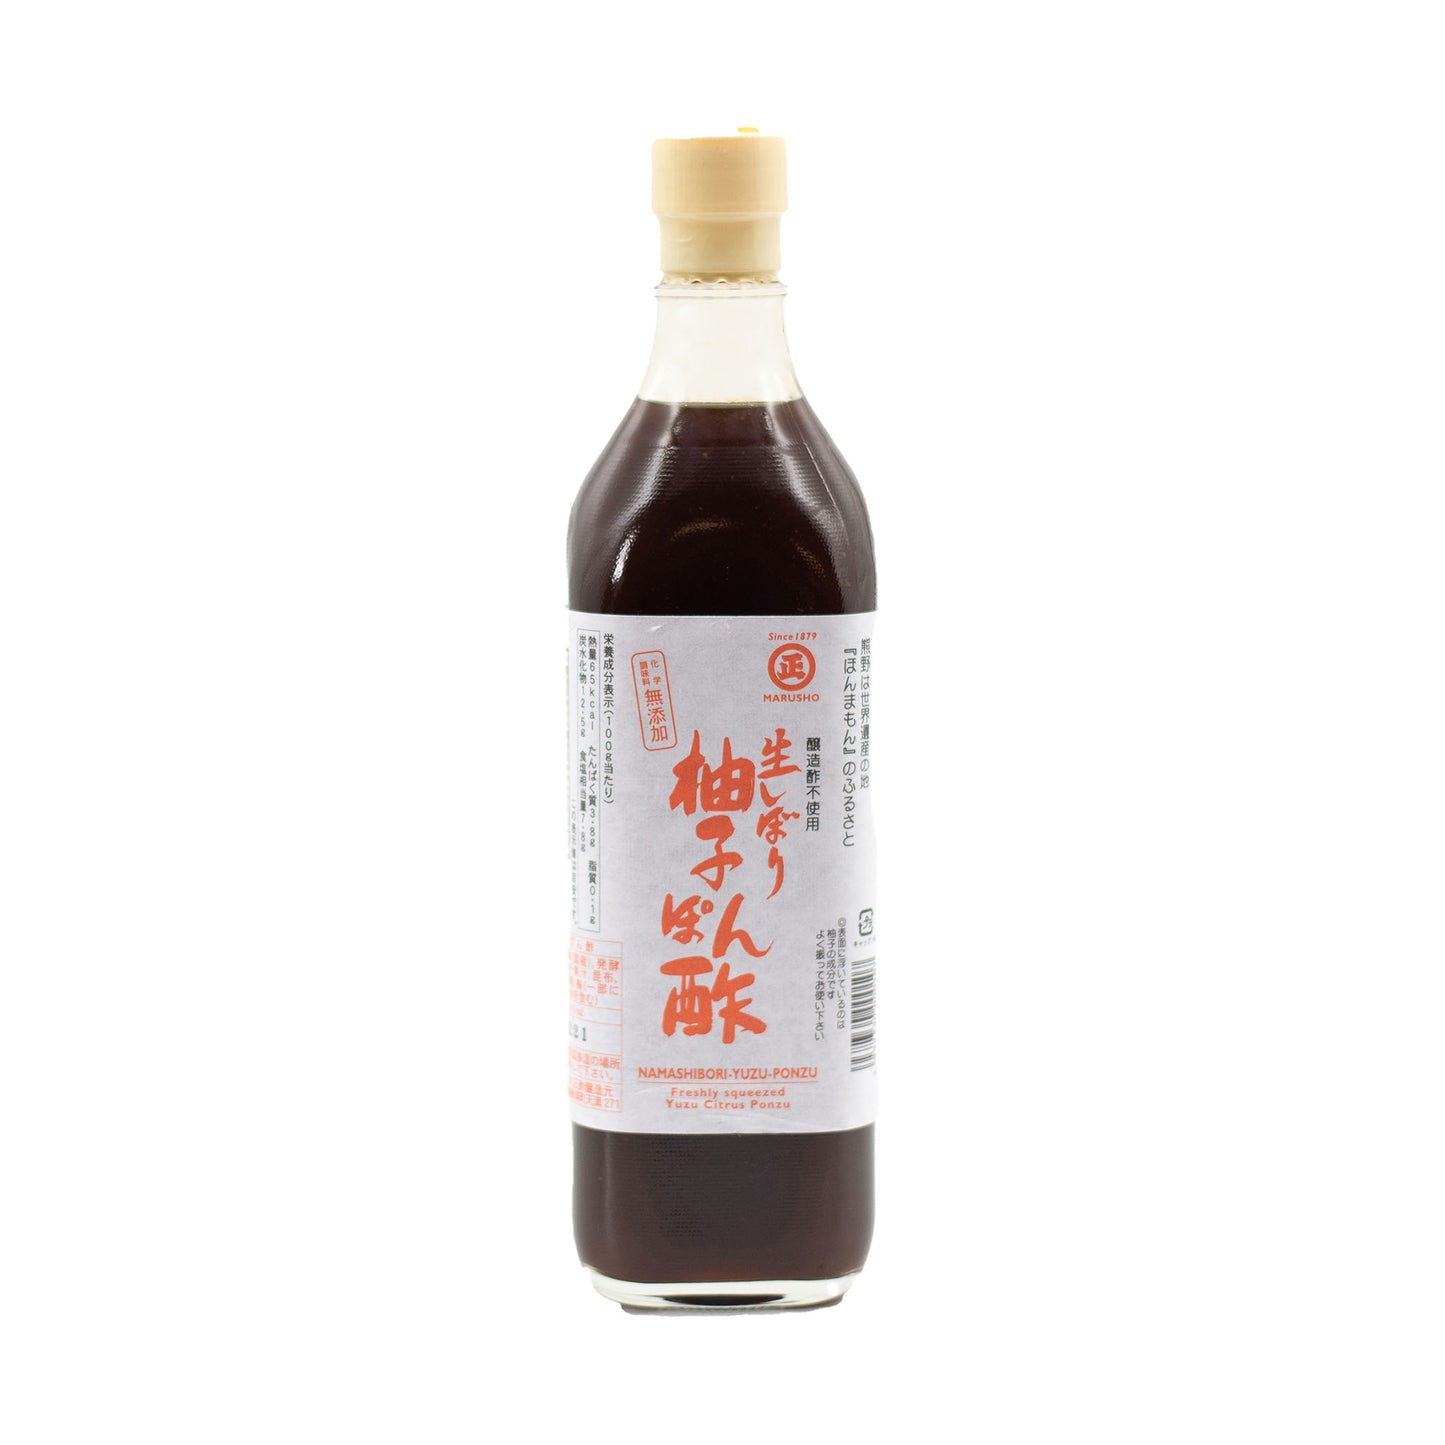 
                  
                    Namashibori Yuzu Ponzu, Fresh Yuzu Ponzu Sauce
                  
                